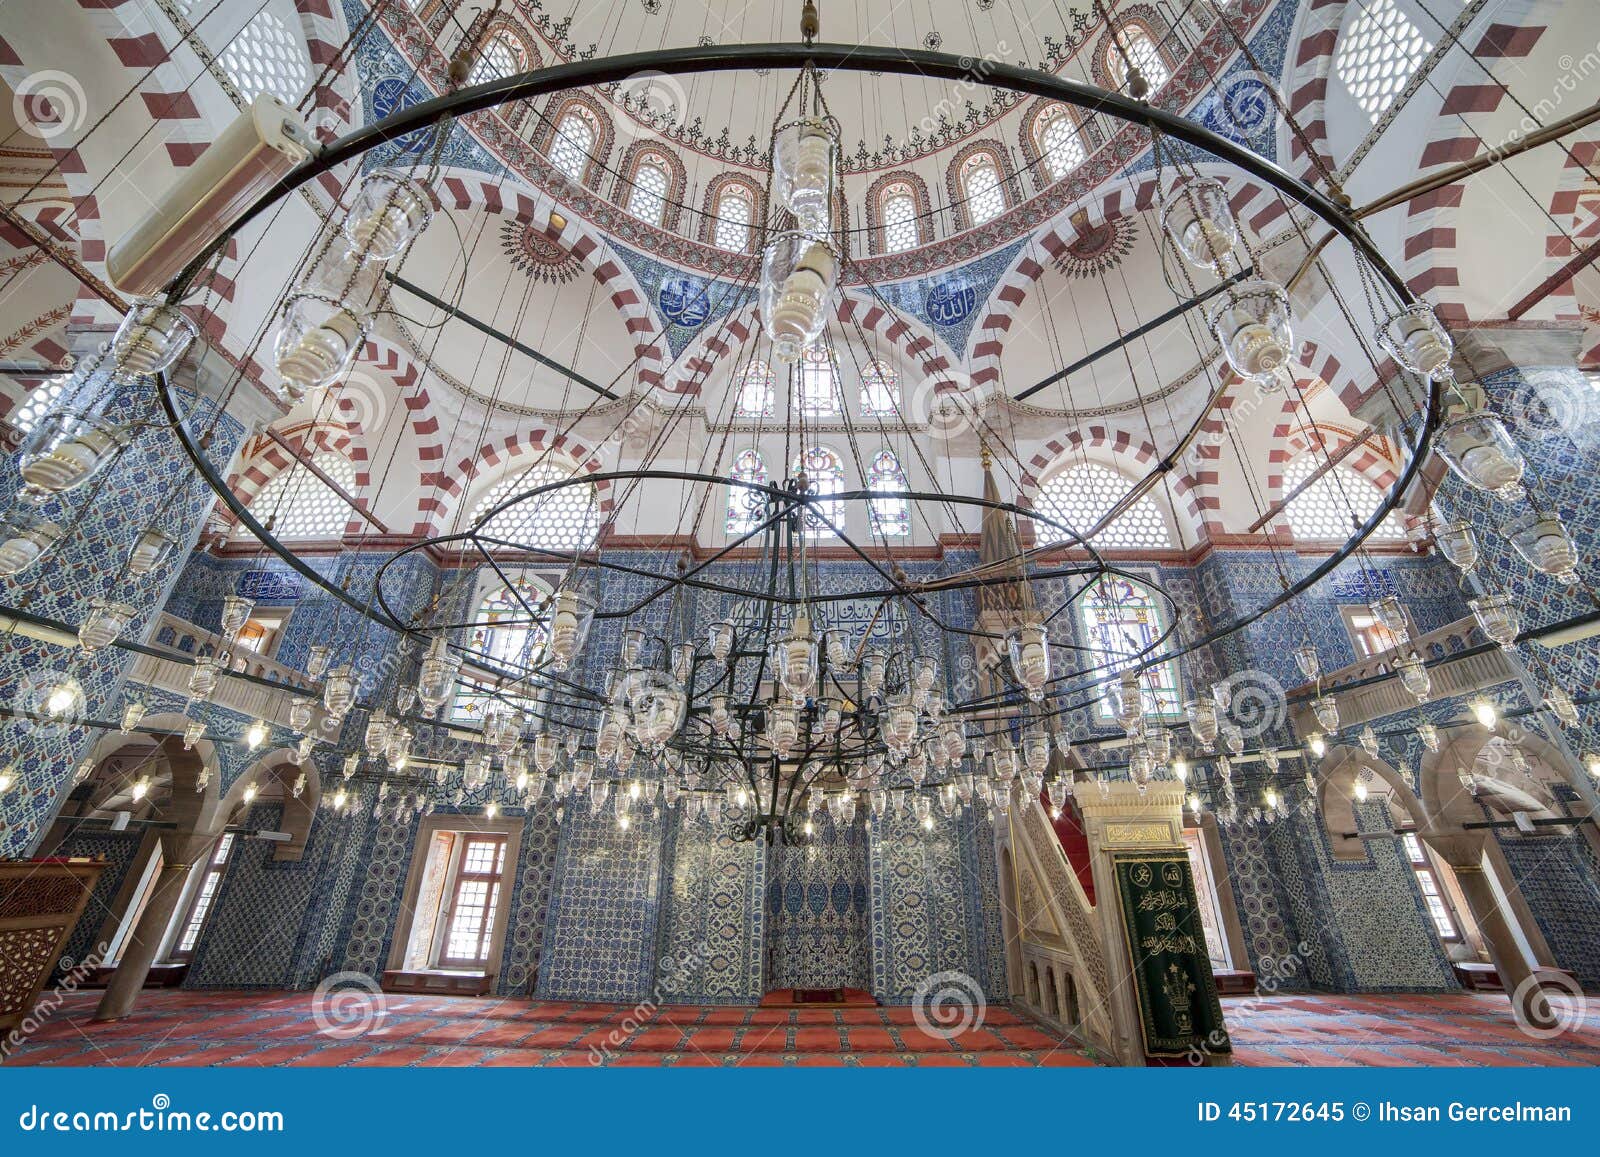 rustem pasa mosque, istanbul, turkey